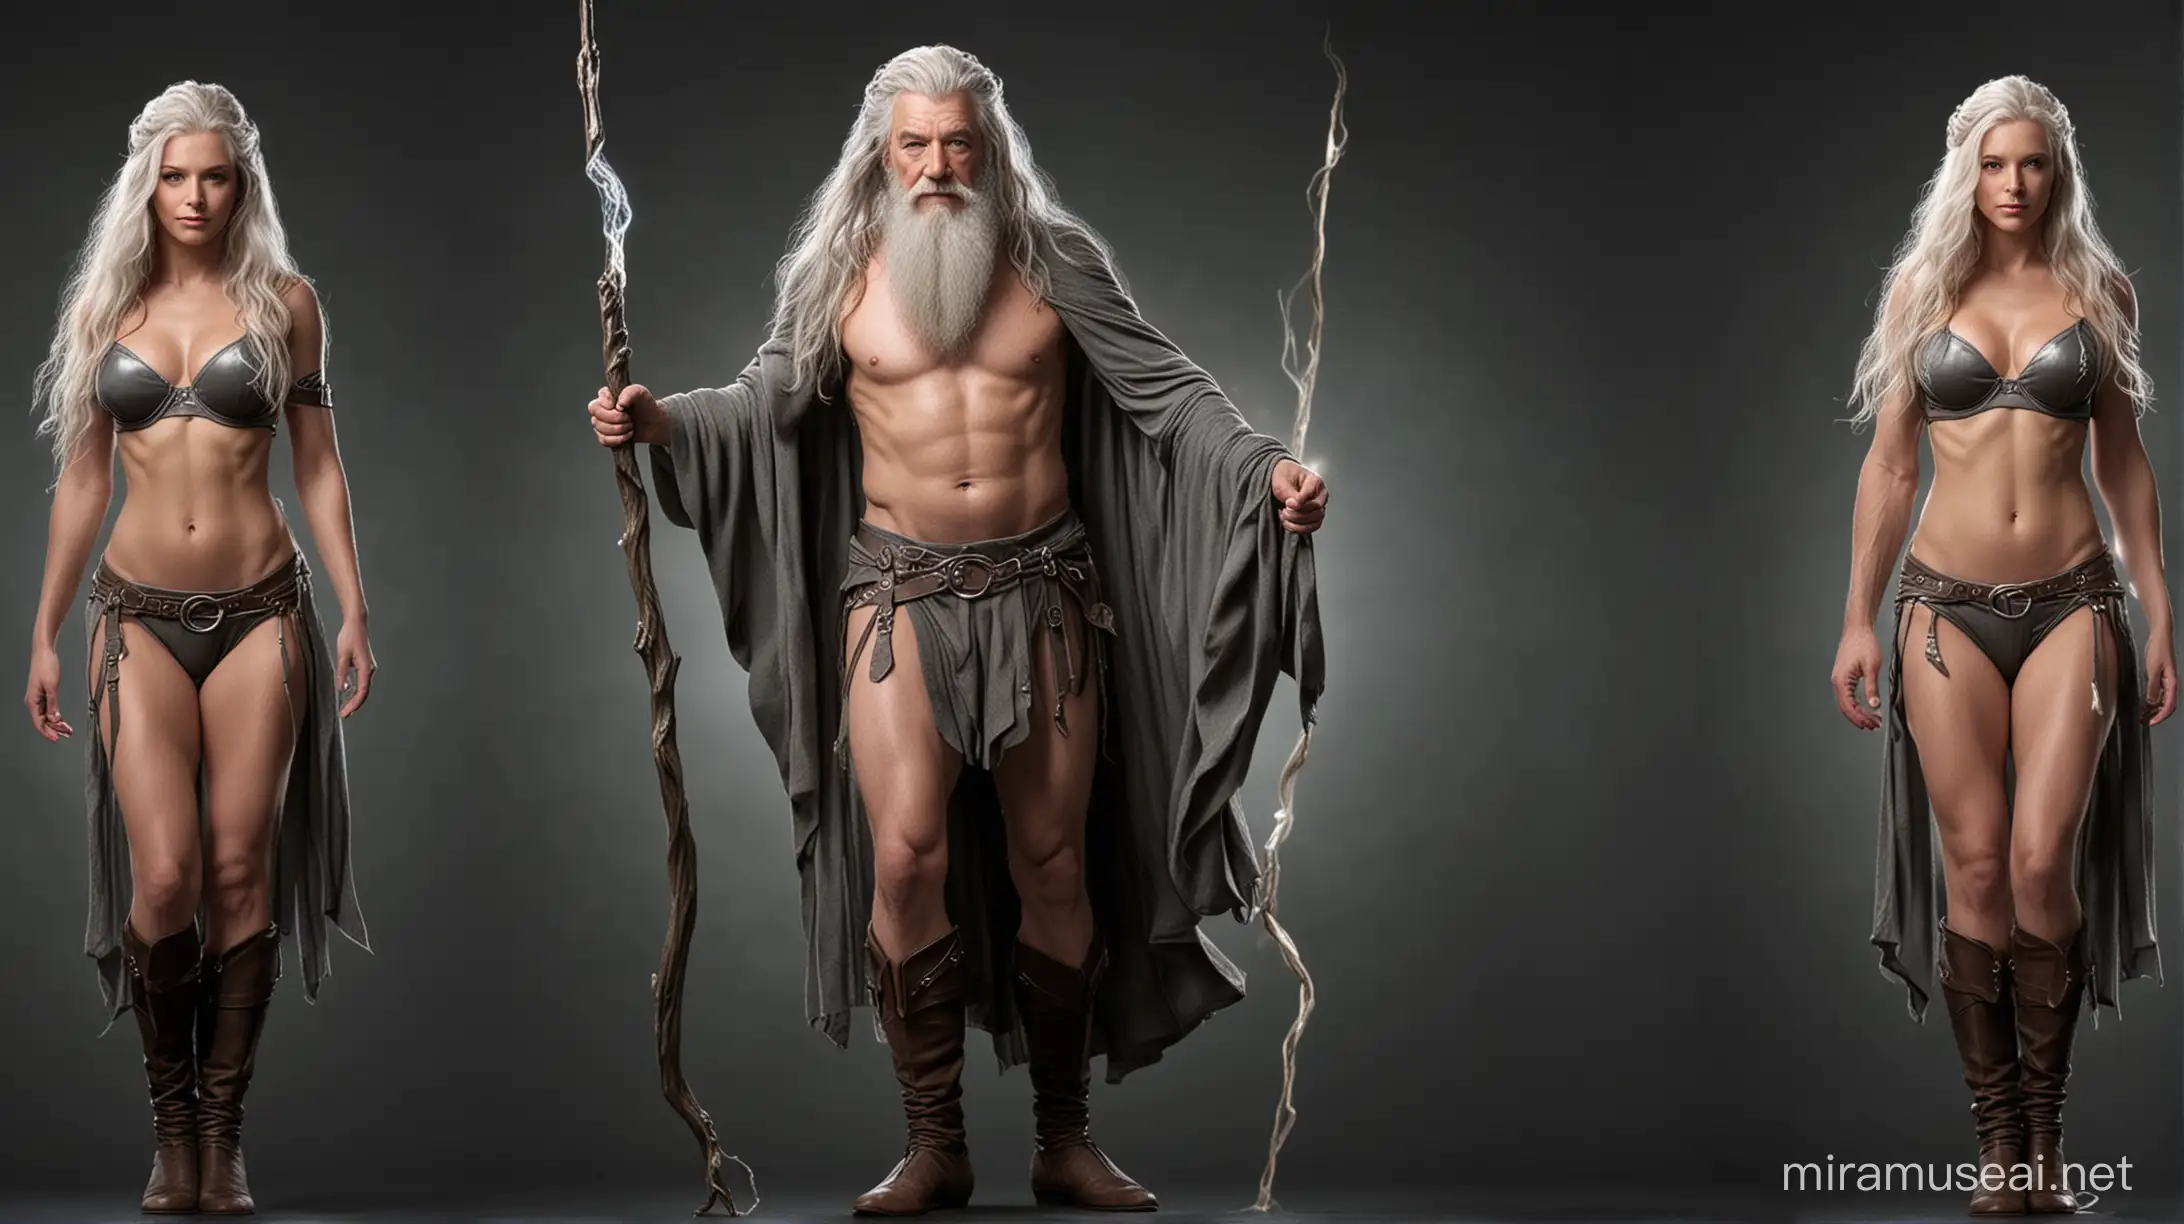 Gandalf Sexy Poledancing Mystical Performance with Lightning Magic